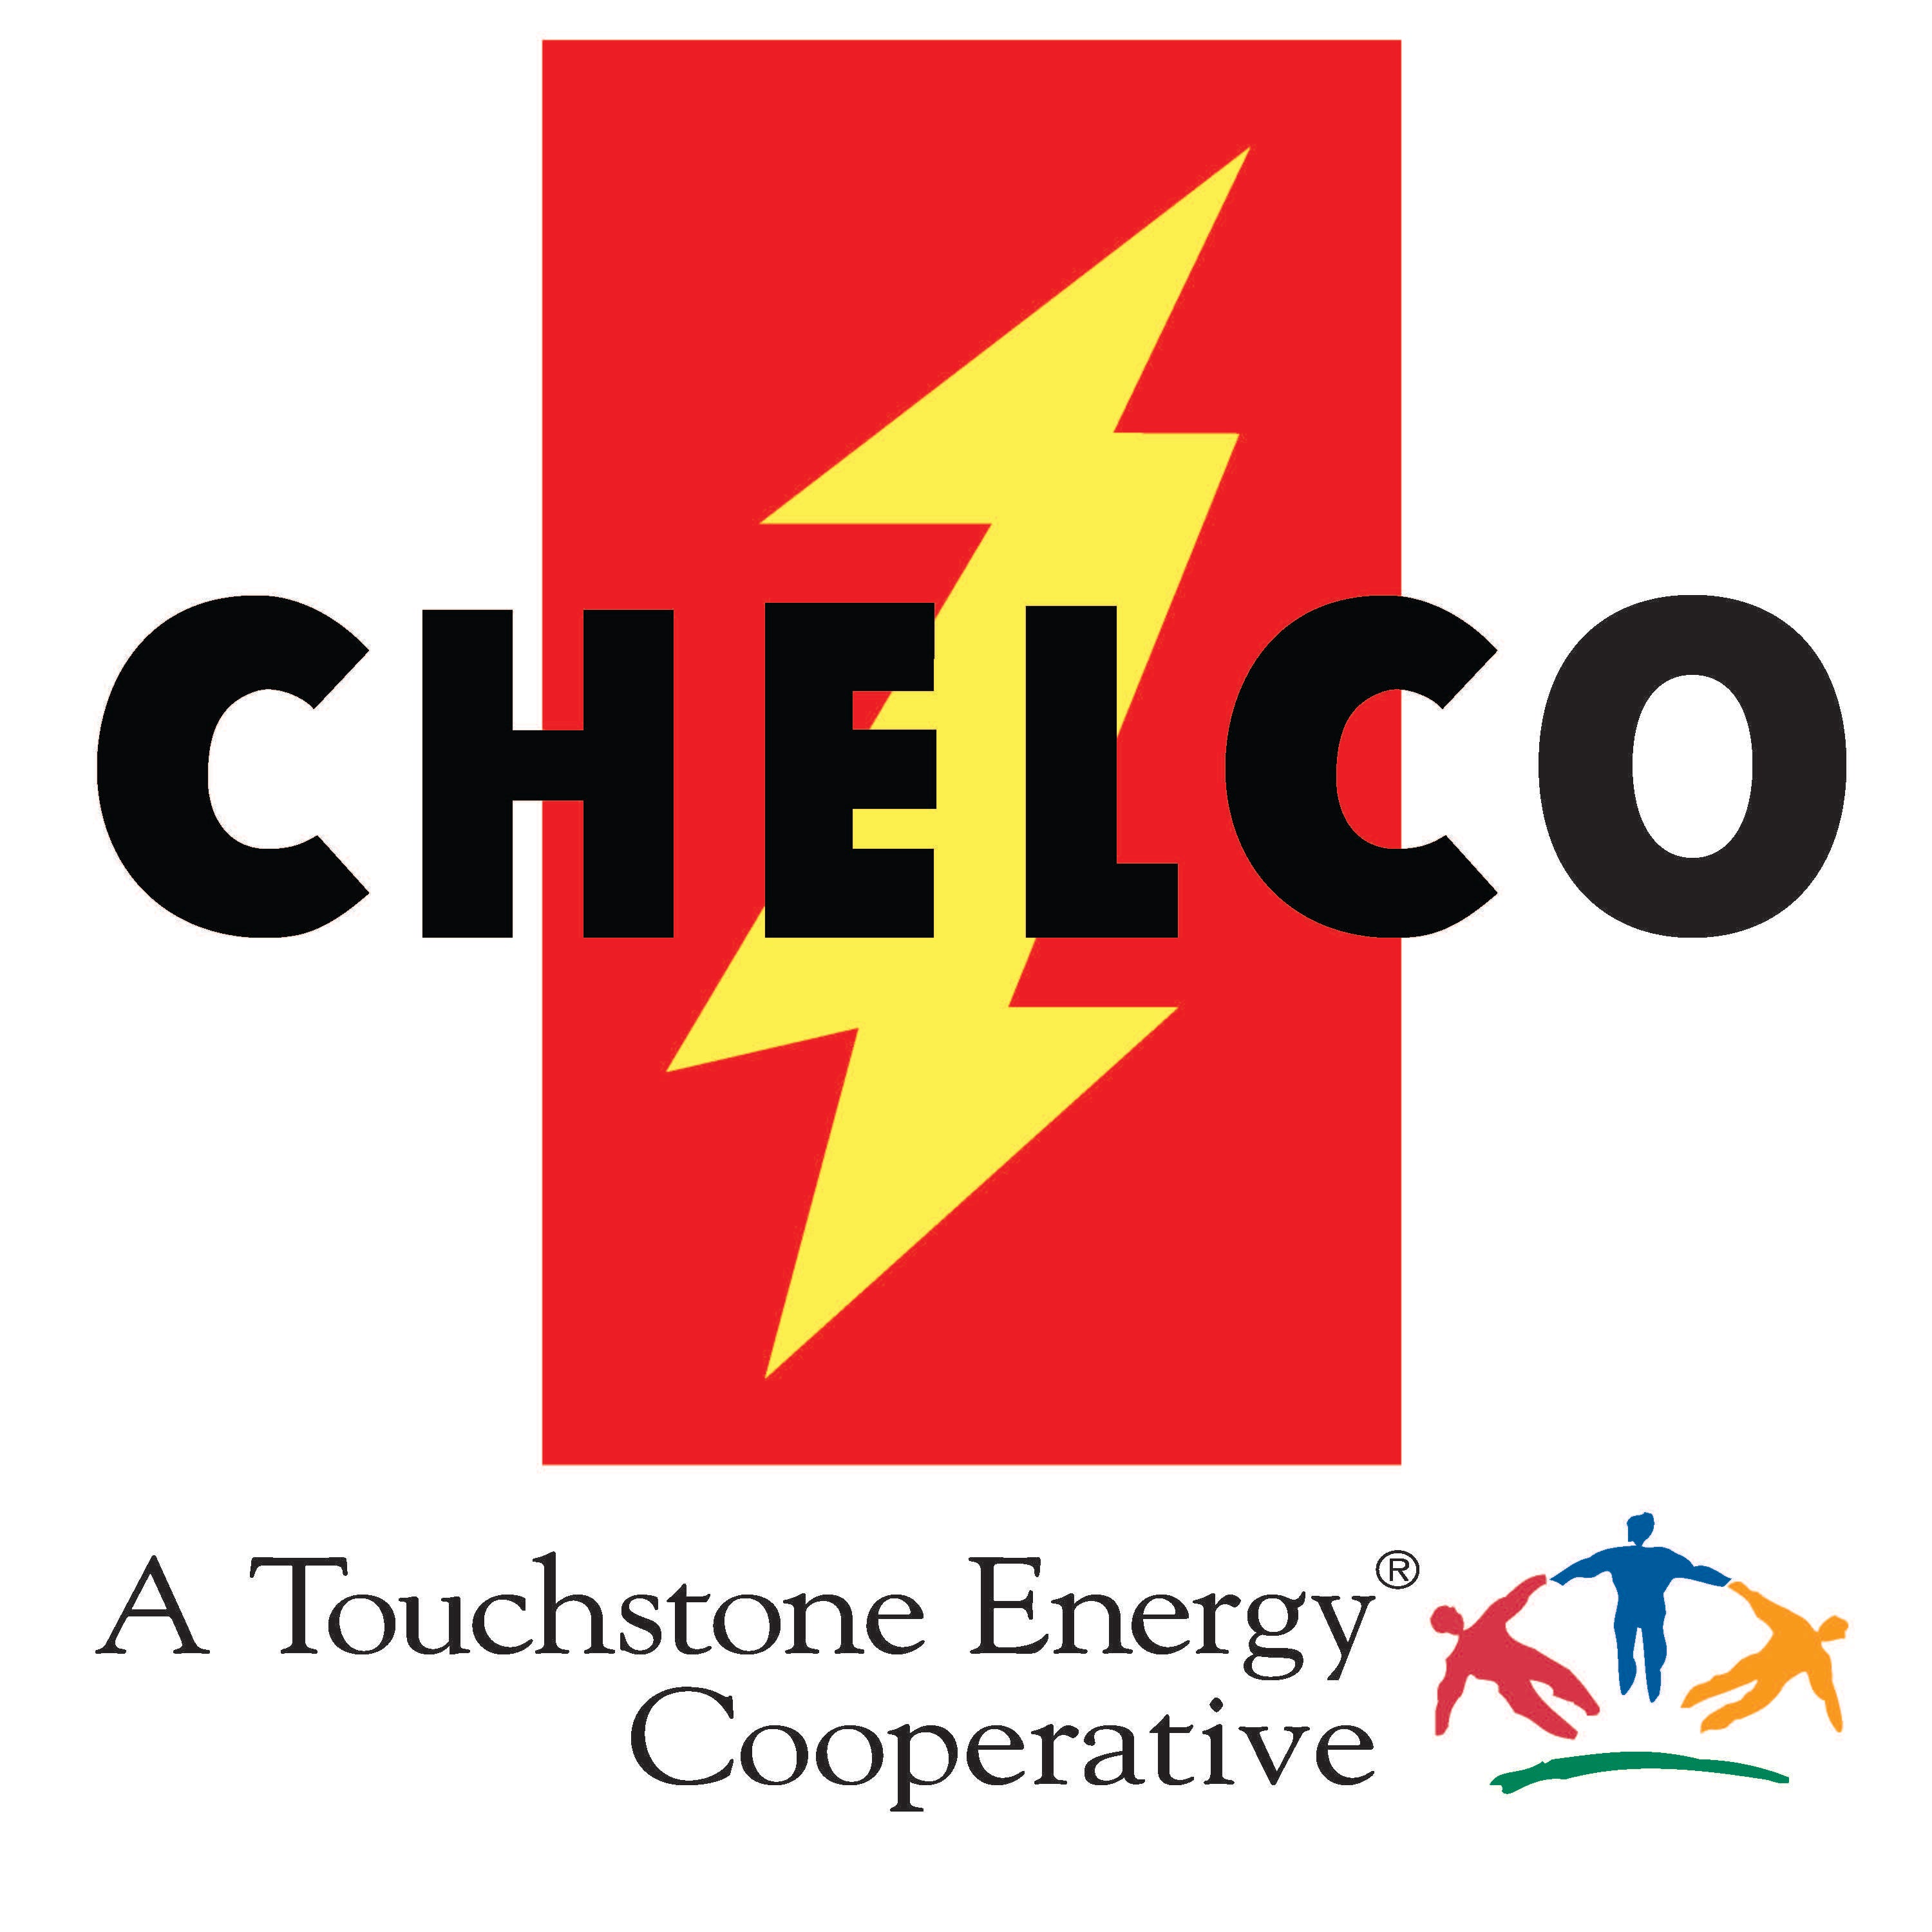 www.chelco.com